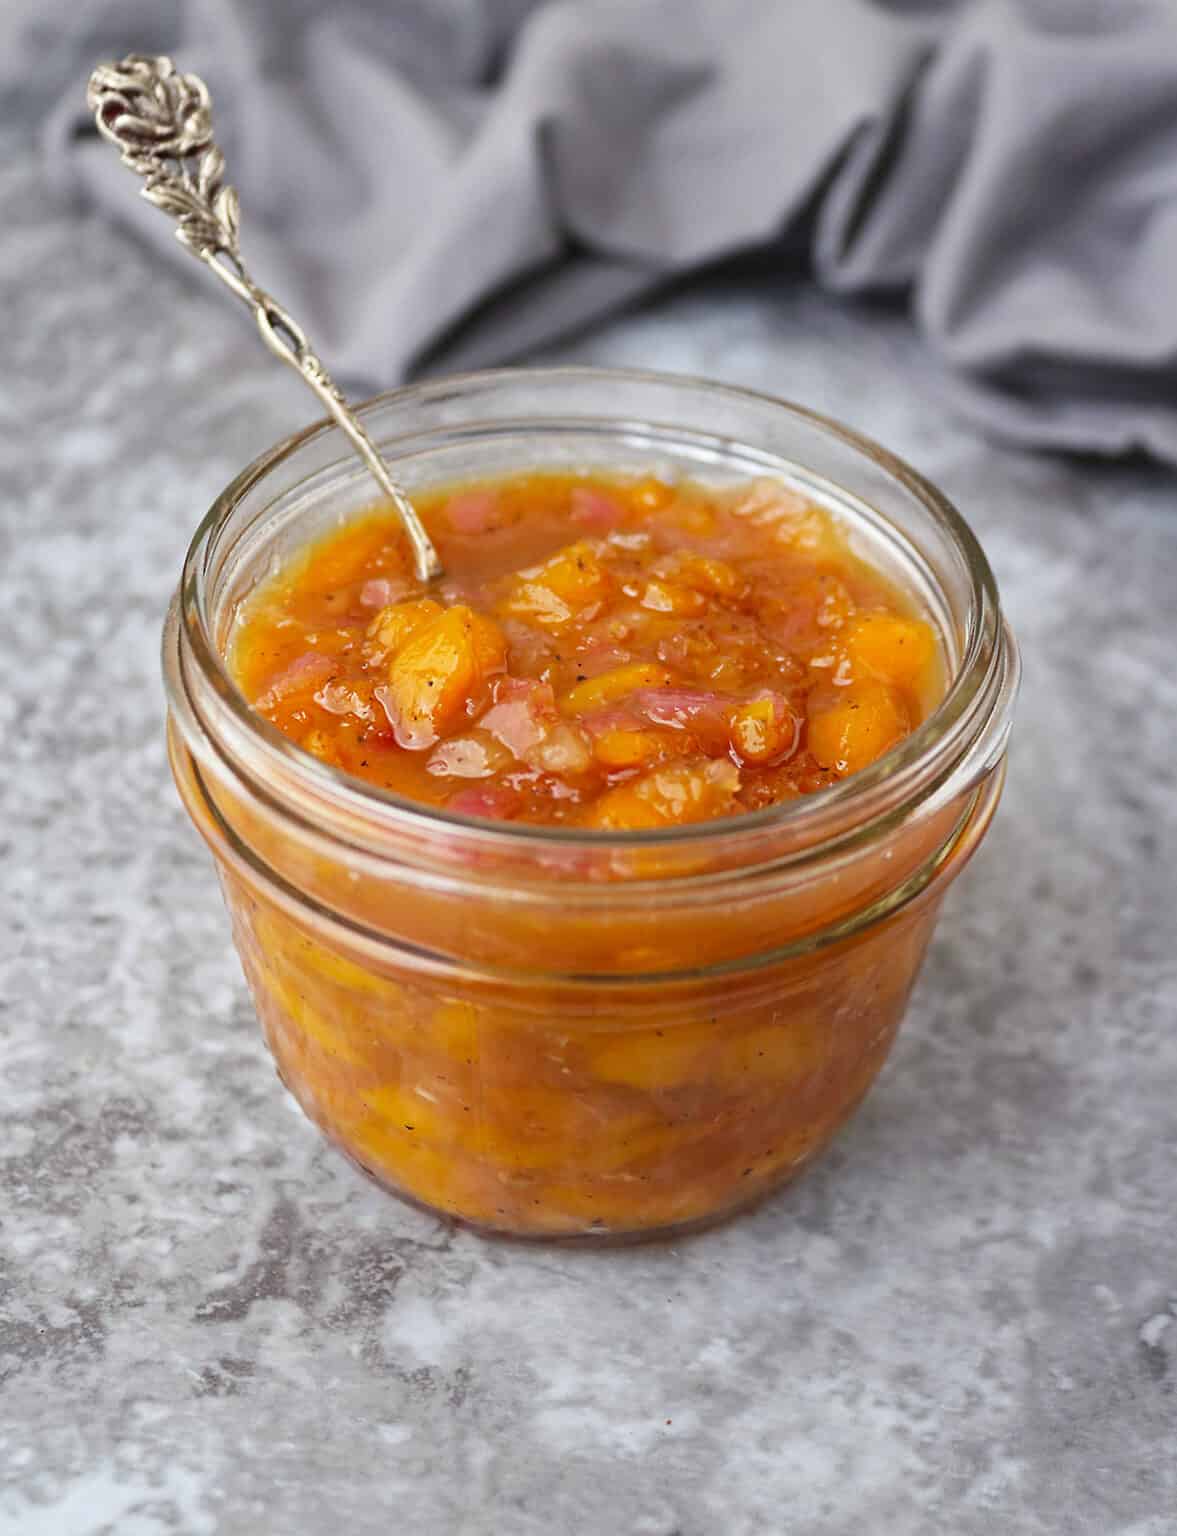 Homemade Easy Mango Chutney Recipe - Savory Spin